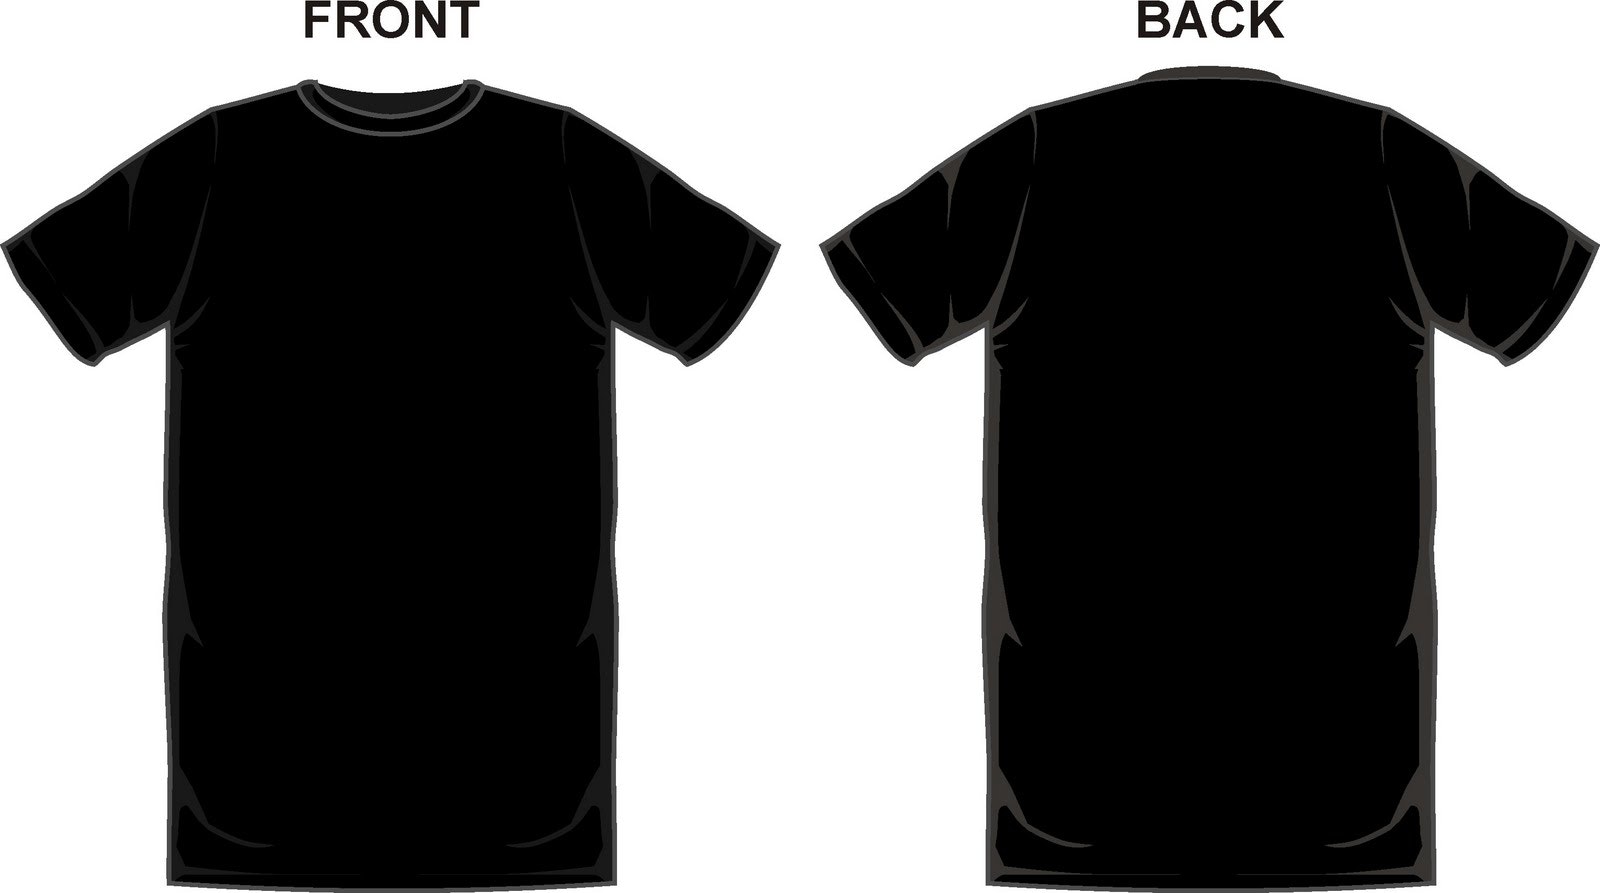 Download 11065+ Black T-Shirt Mockup Front And Back Free Amazing PSD Mockups File